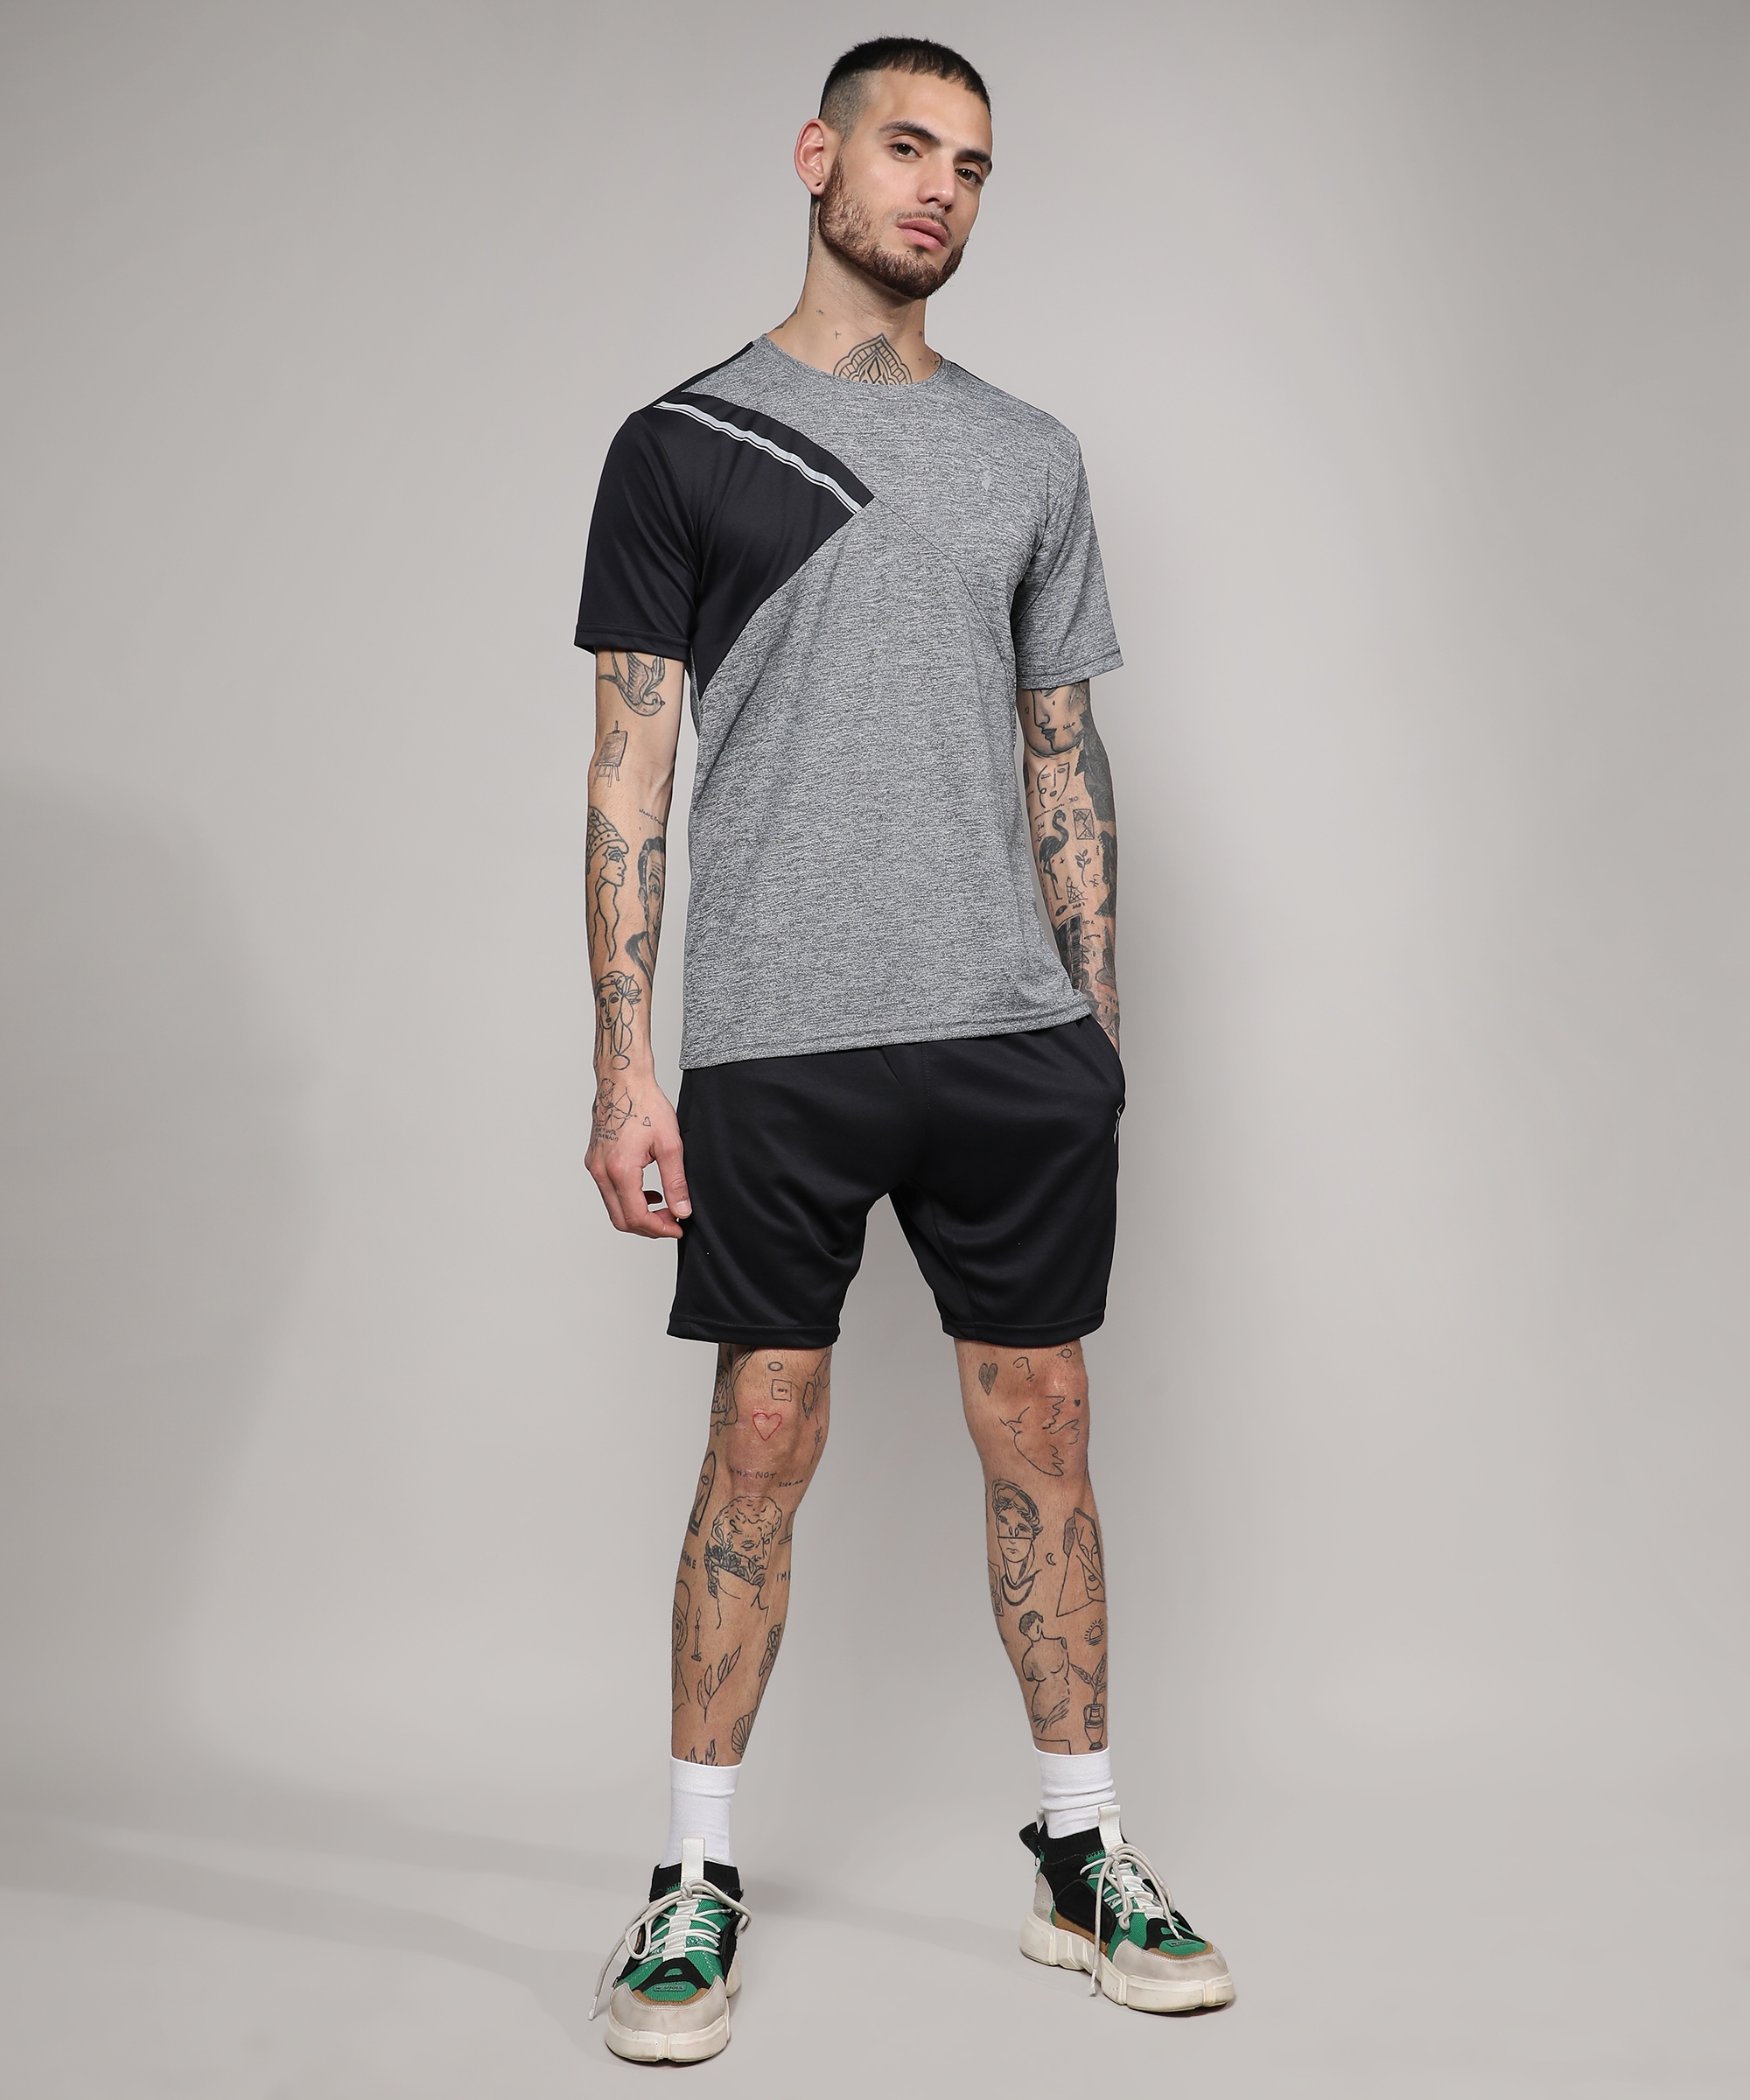 CAMPUS SUTRA | Men's Charcoal Grey and Jet Black Colourblock Activewear T-Shirt